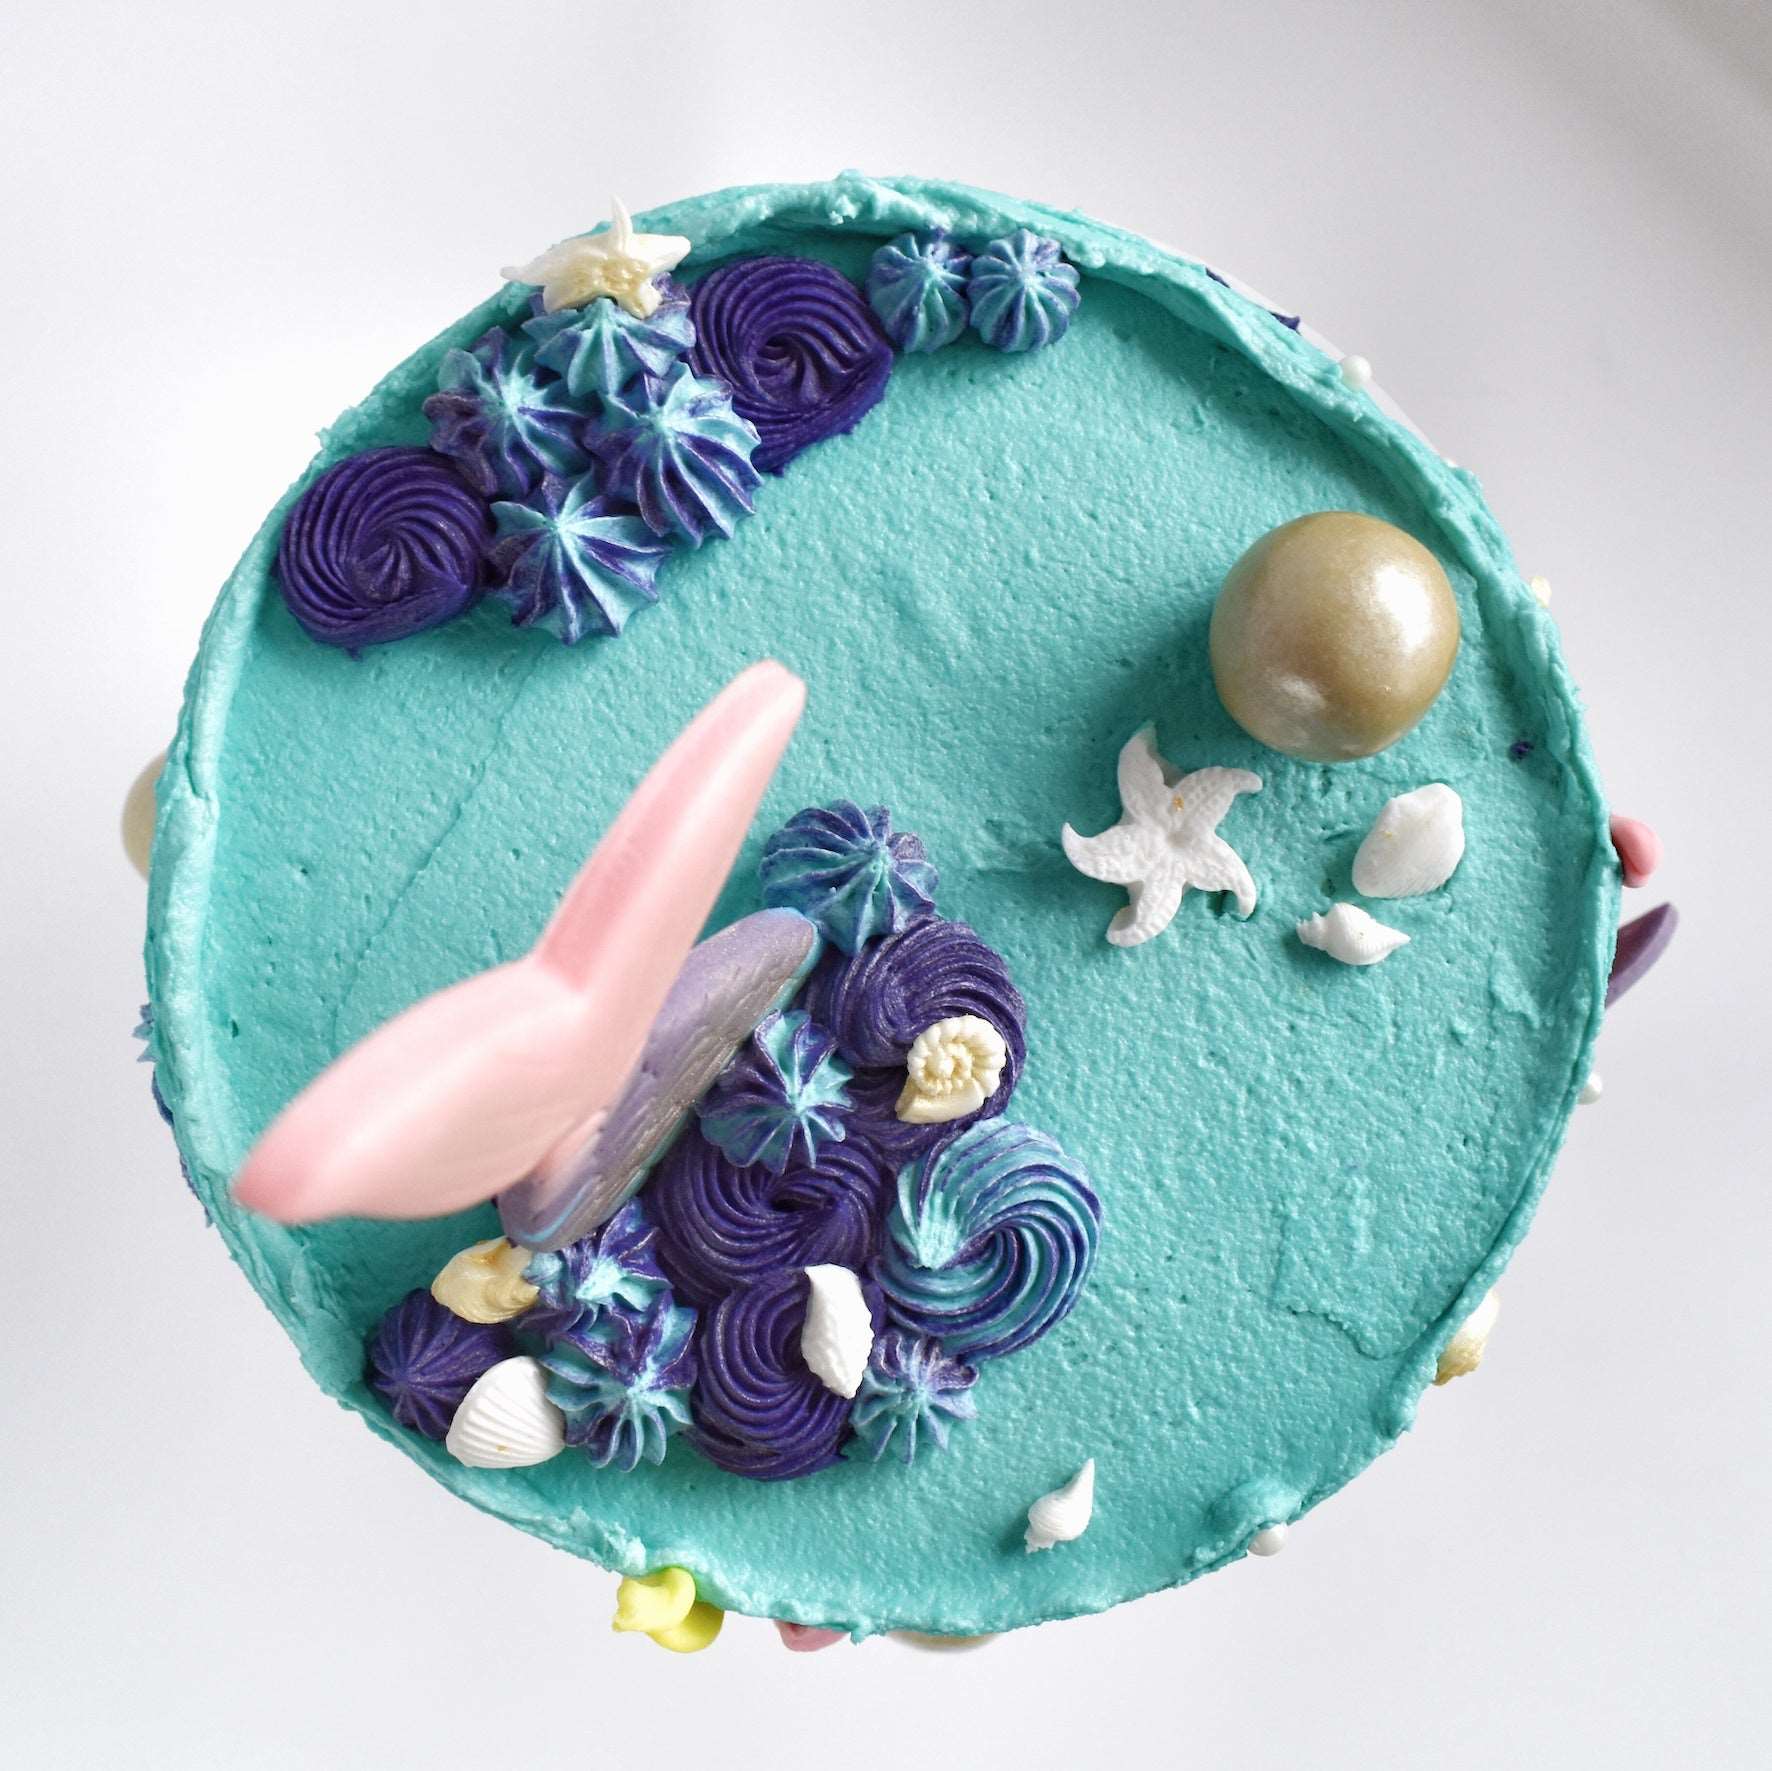 Mermaid DIY Cake Kit, Children's Birthday Cake, Girls Birthday Cake, Under the sea cake, Ocean Cake, Teal Cake, Coral Cake